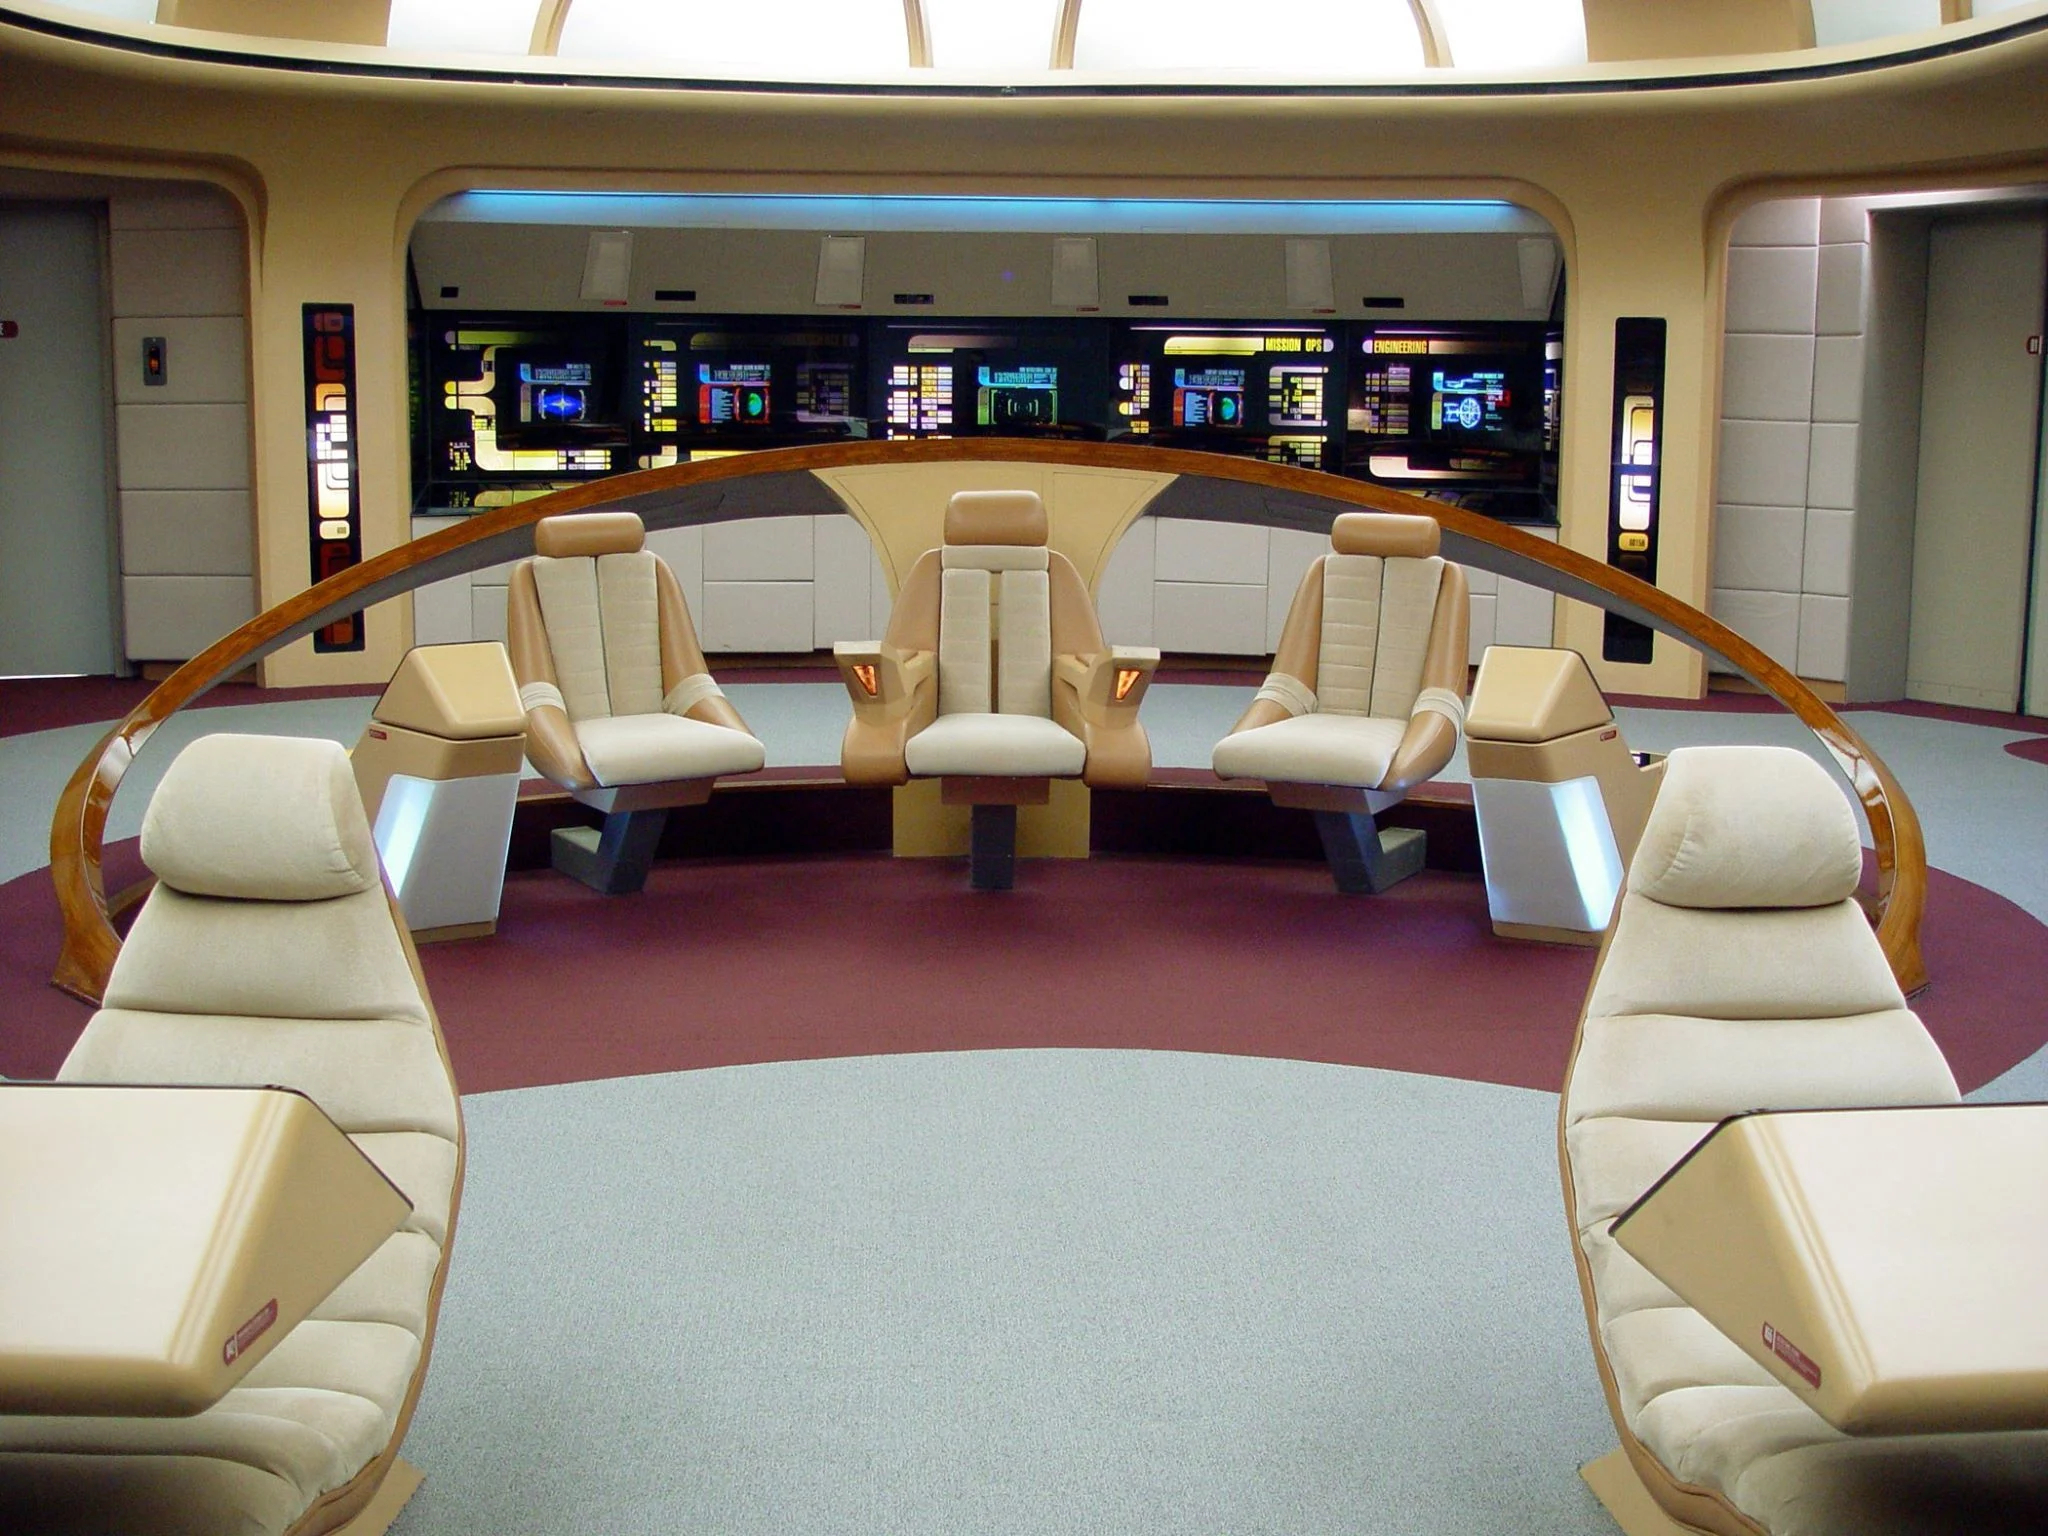 2048x1536 Star Trek Enterprise Bridge Wallpapers Top Free Star Trek Enterprise Bridge Backgrounds